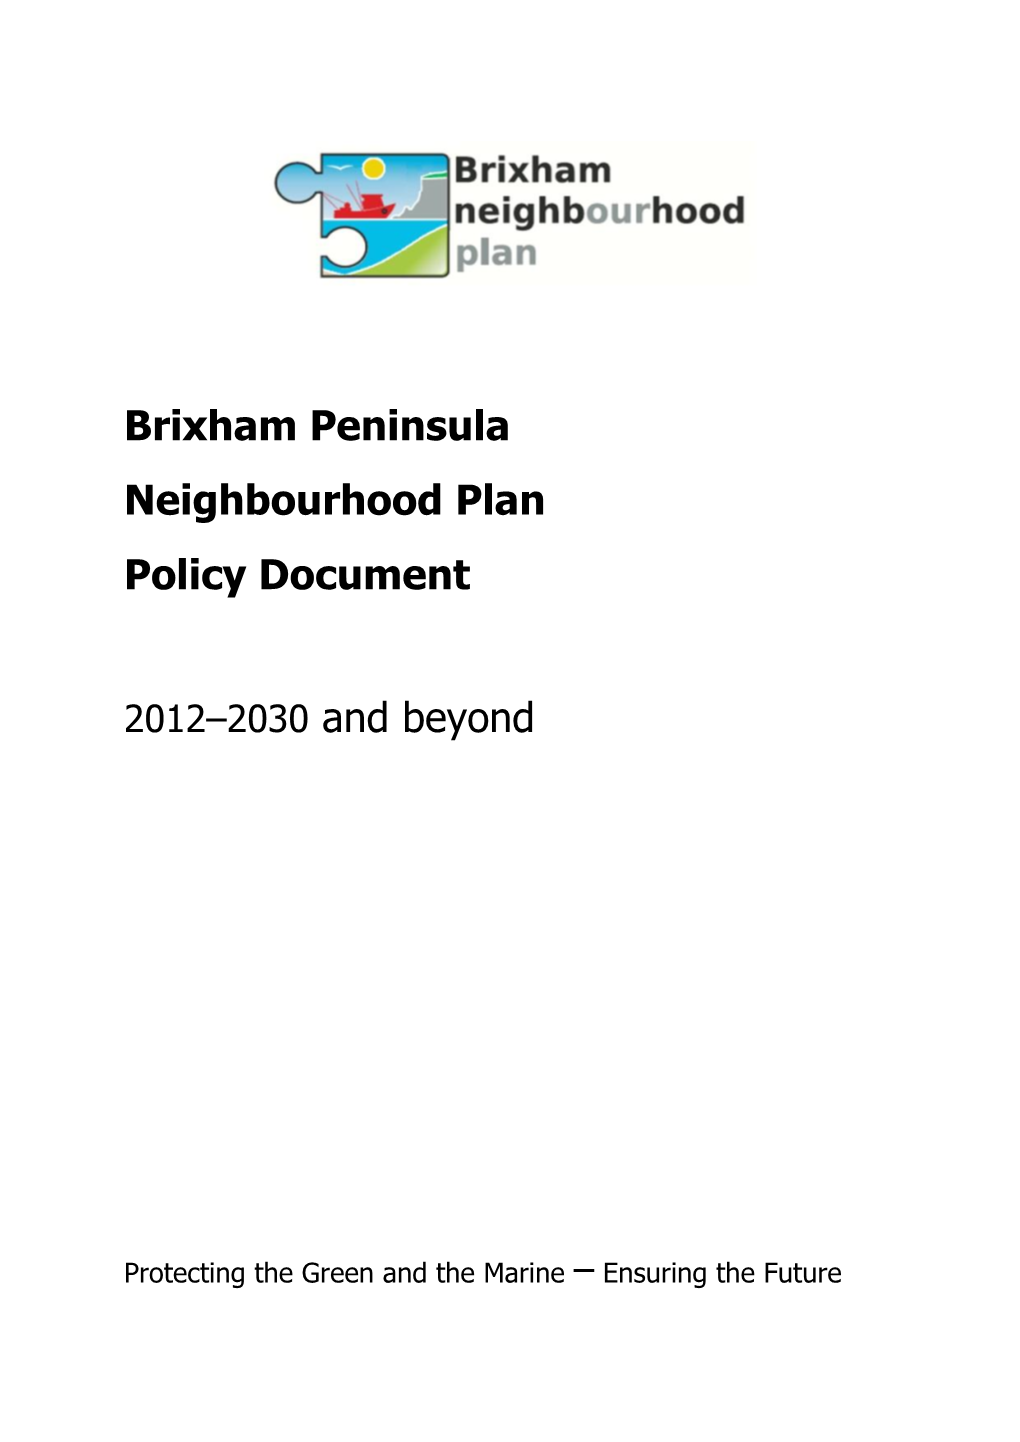 Brixham Peninsula Neighbourhood Plan Policy Document